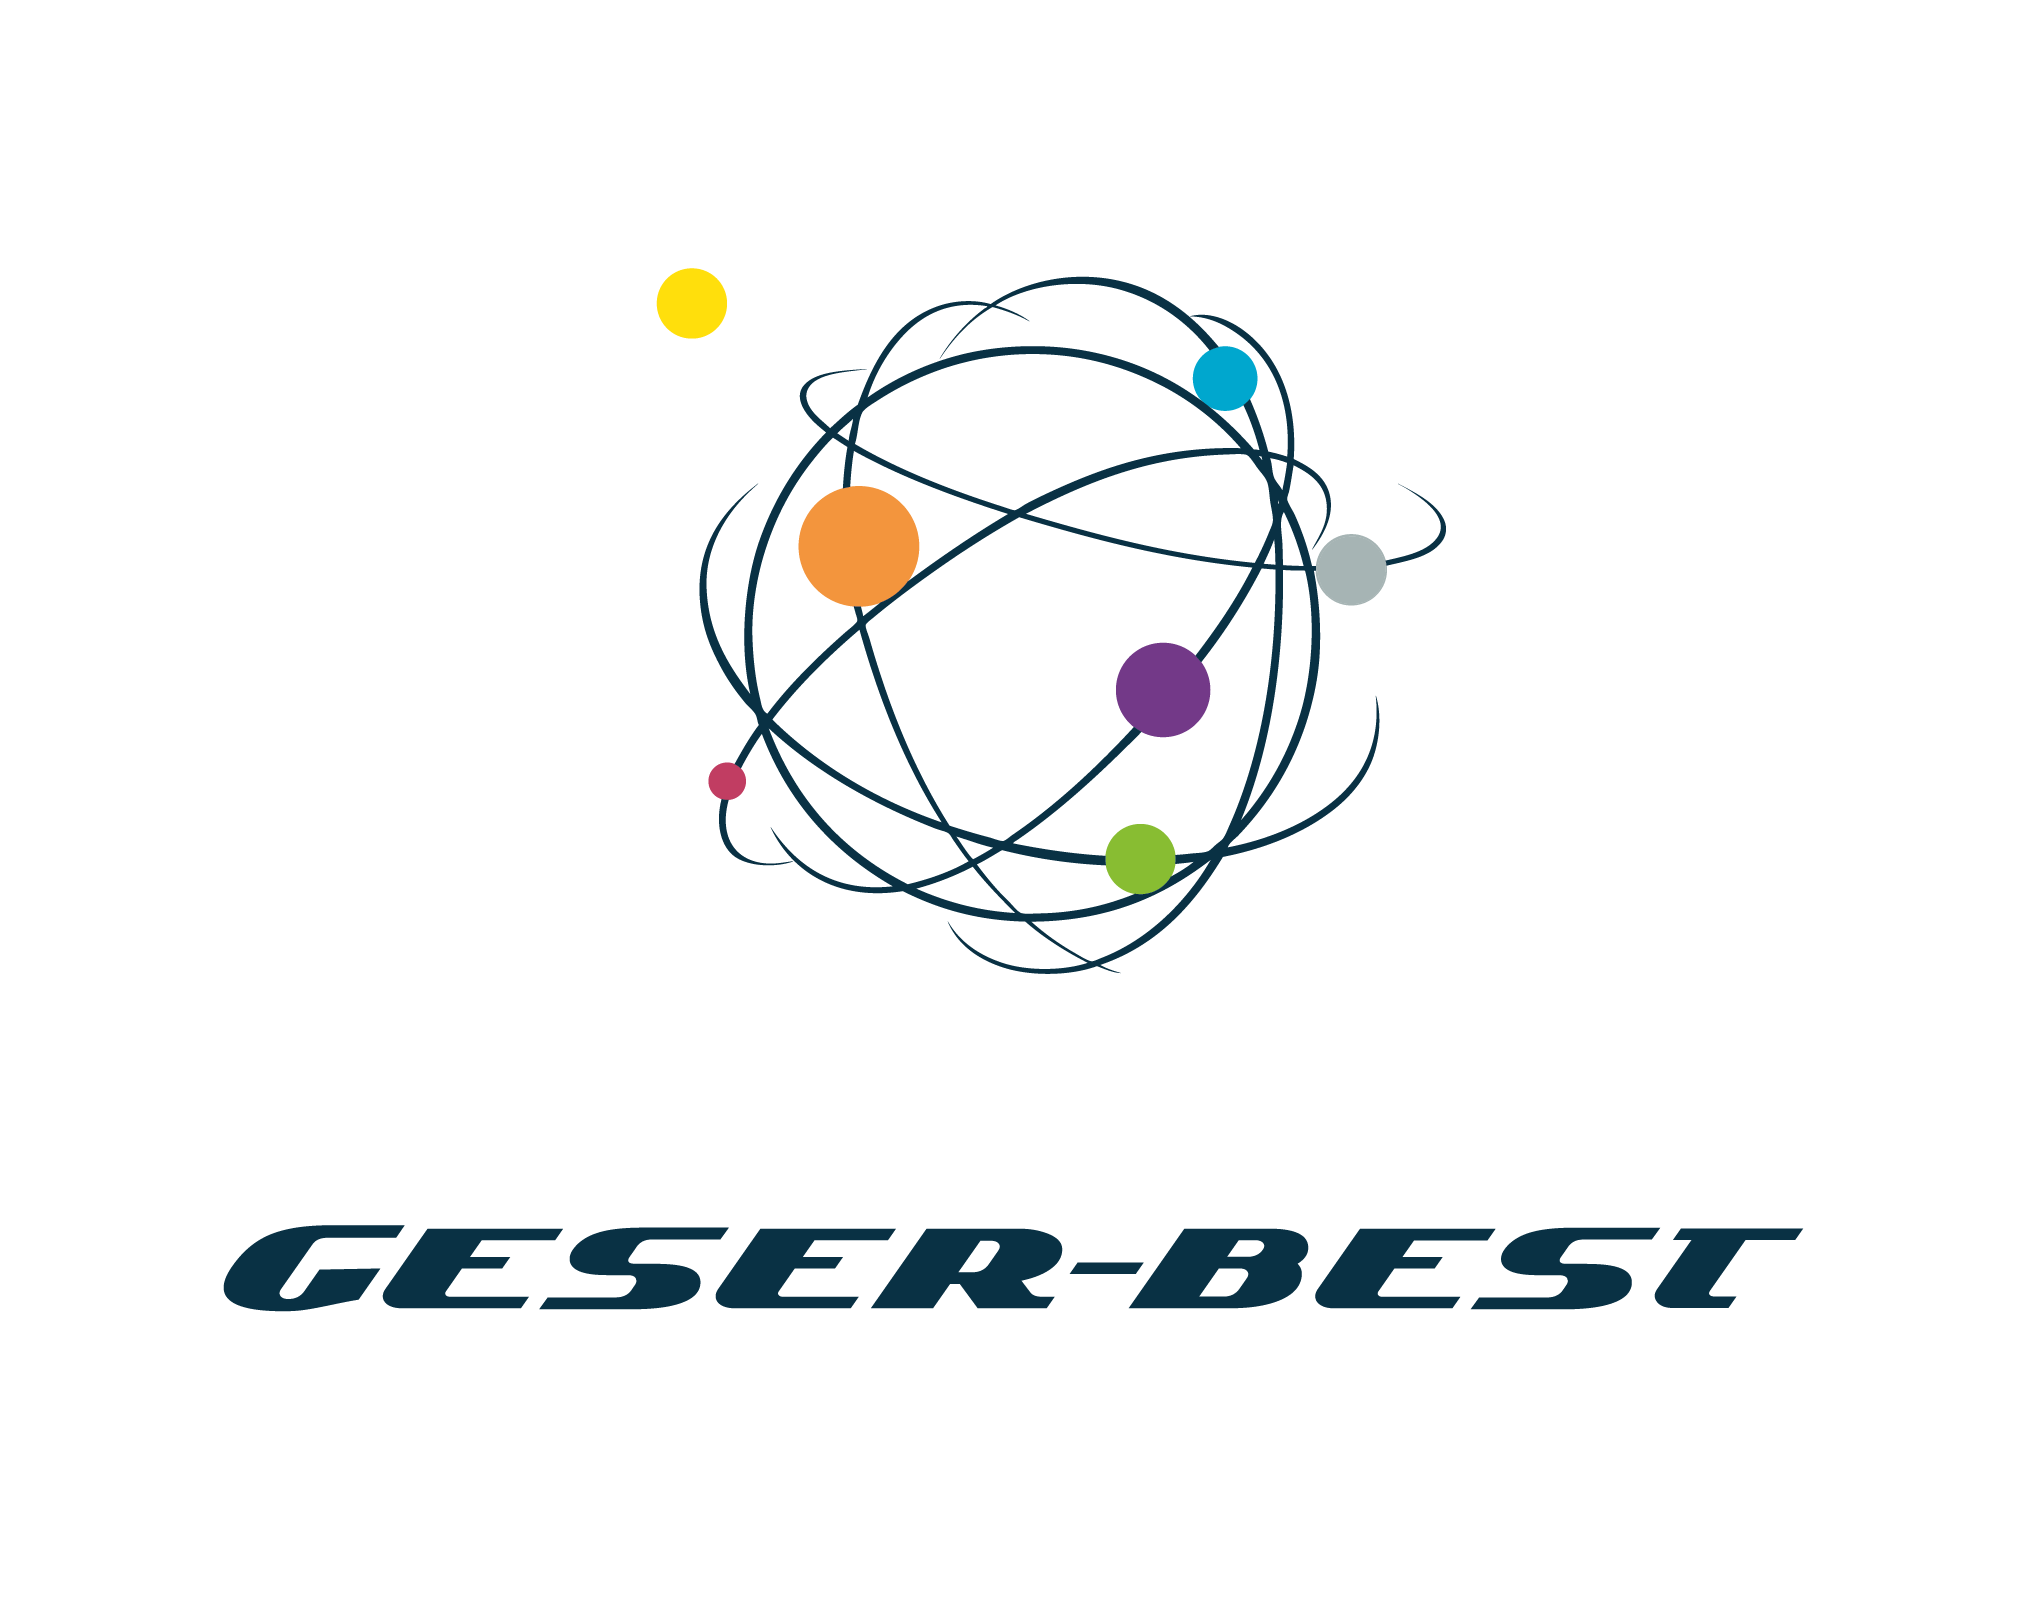 GESER-BEST